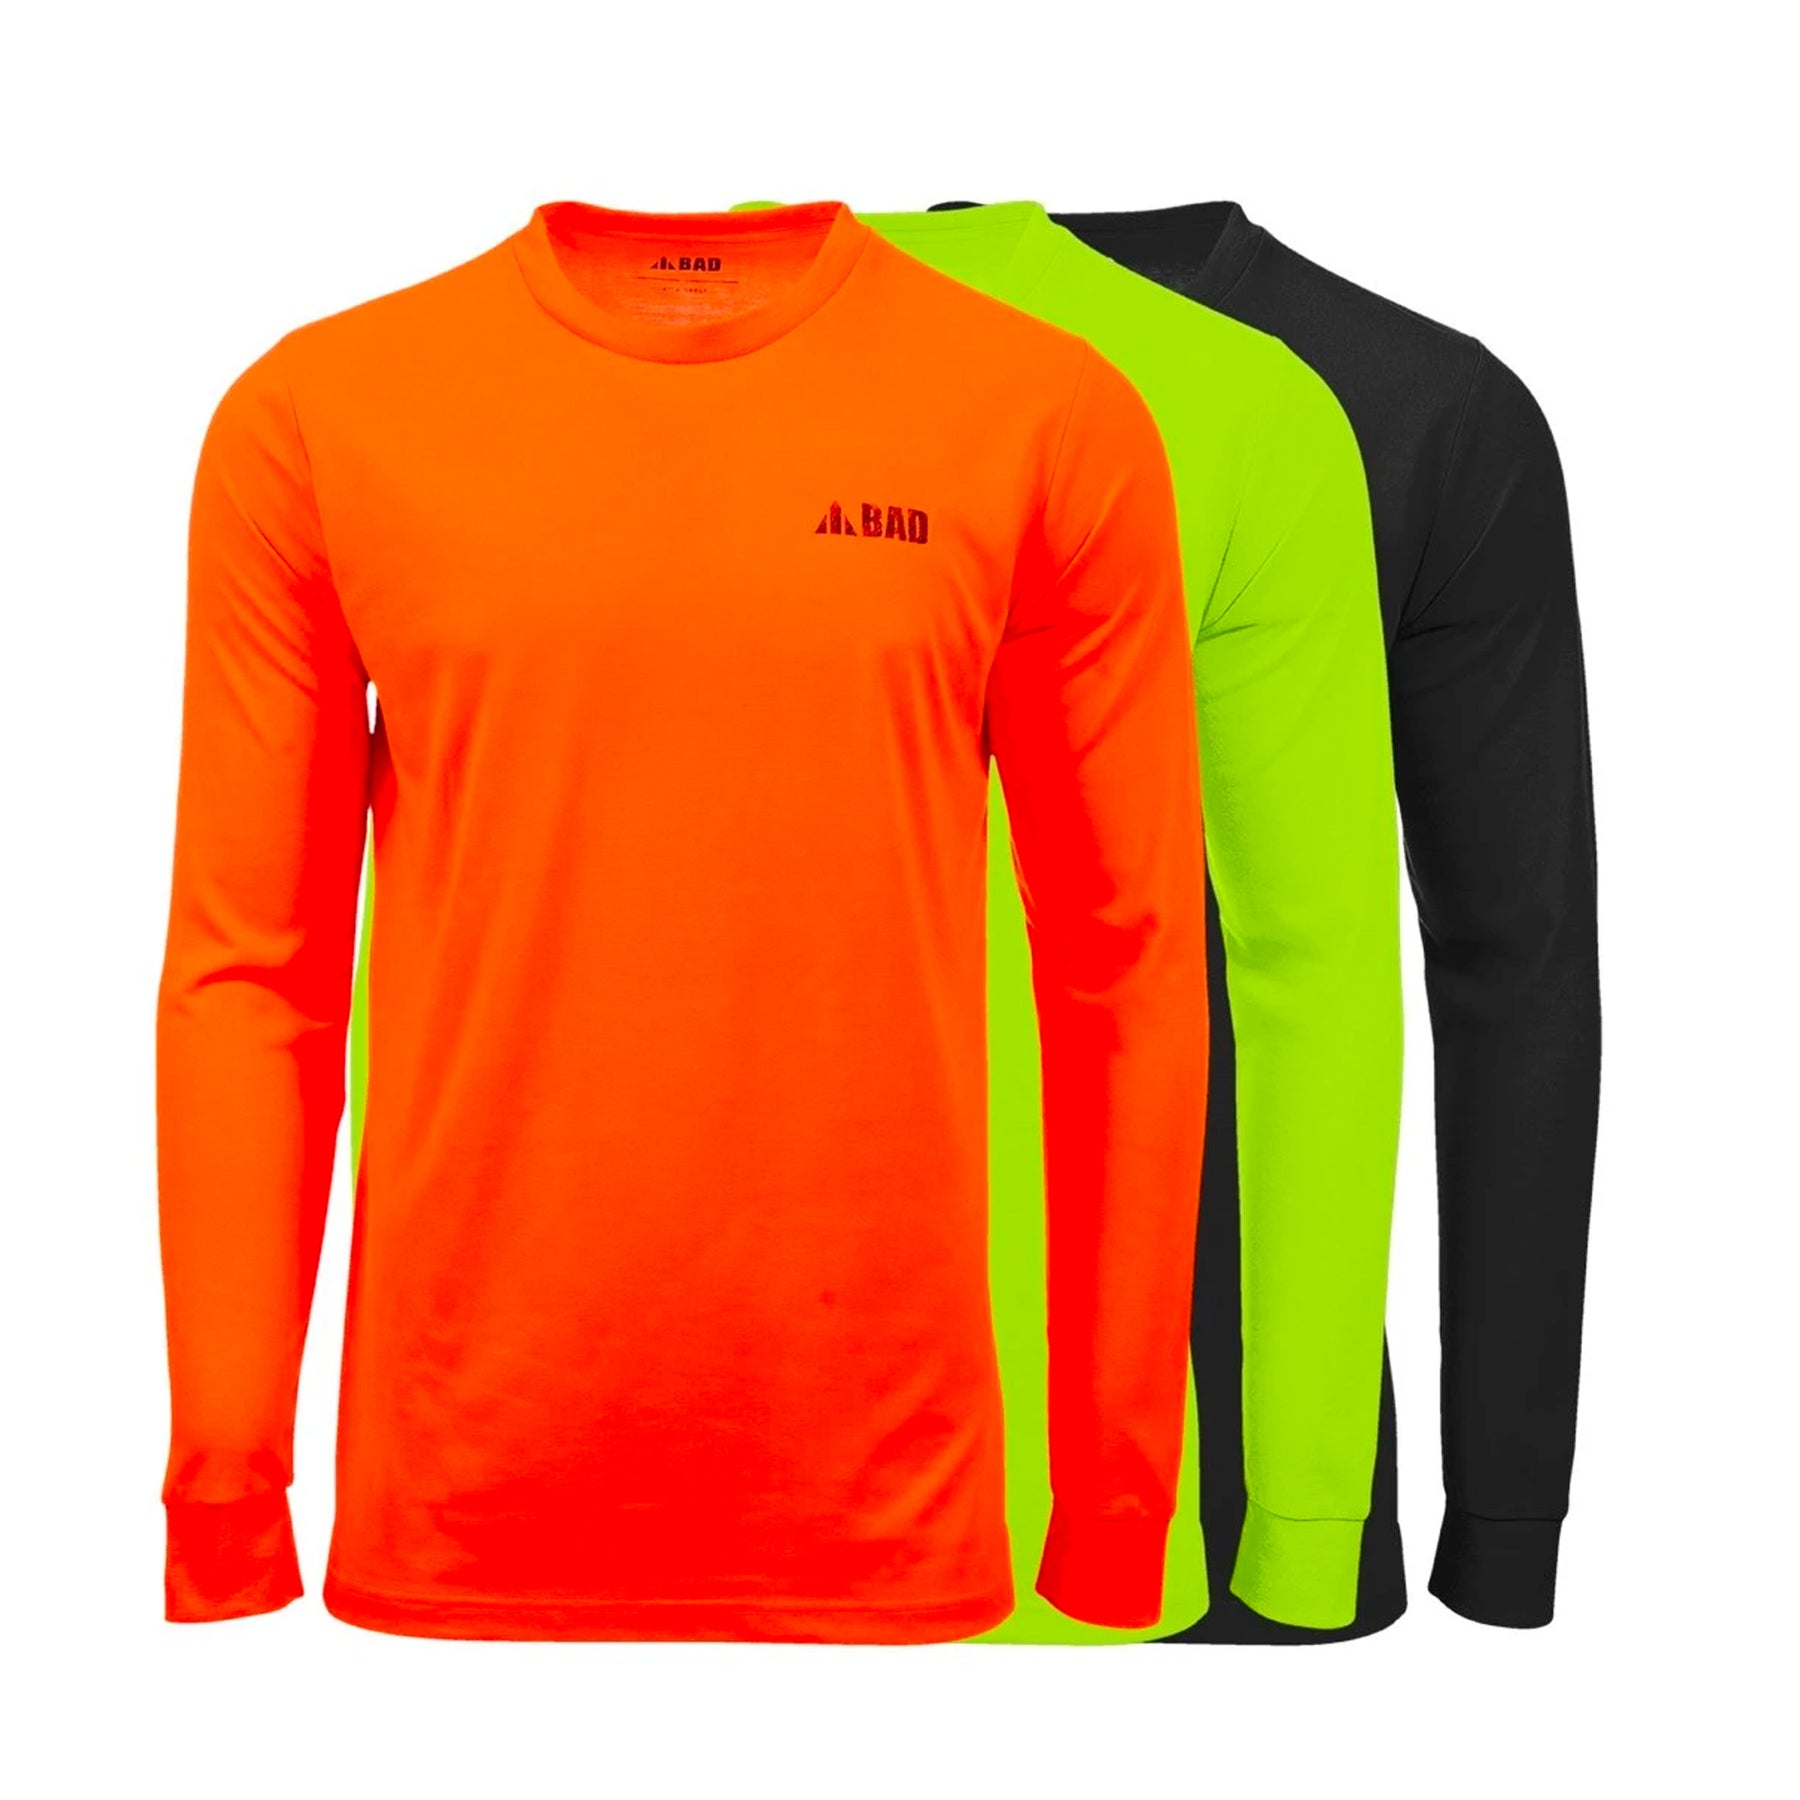 bad trademark long sleeve tshirt in orange, yellow and black